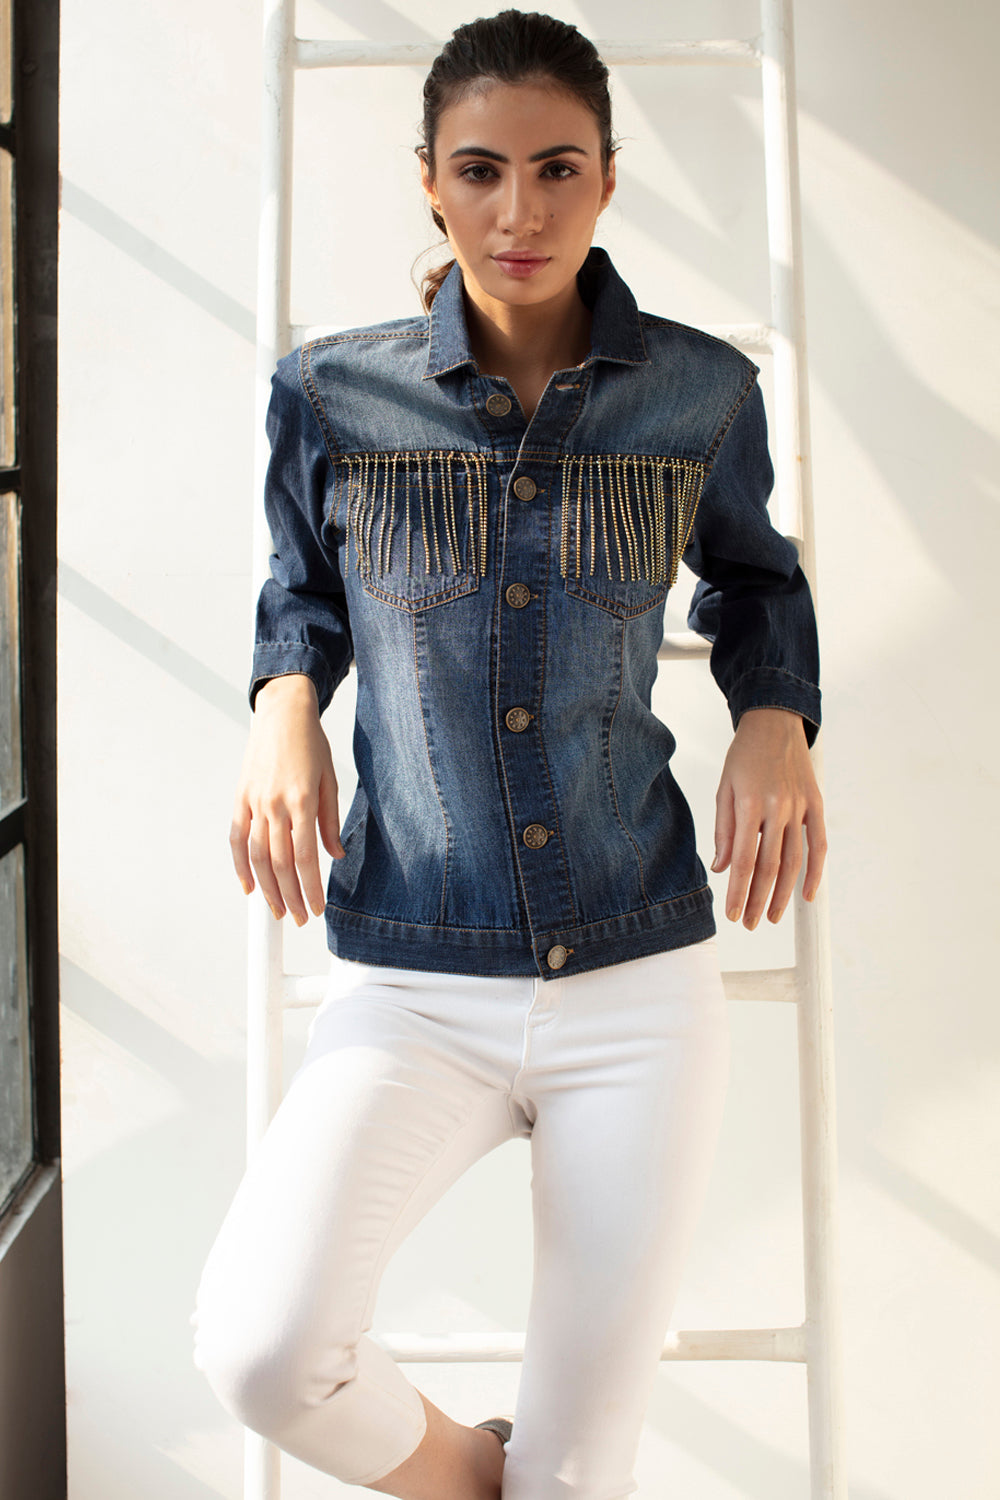 Elasticity Slim Denim Jackets Women Student Outwear Casual Short Blue Jeans  Jacket Coat at Amazon Women's Coats Shop